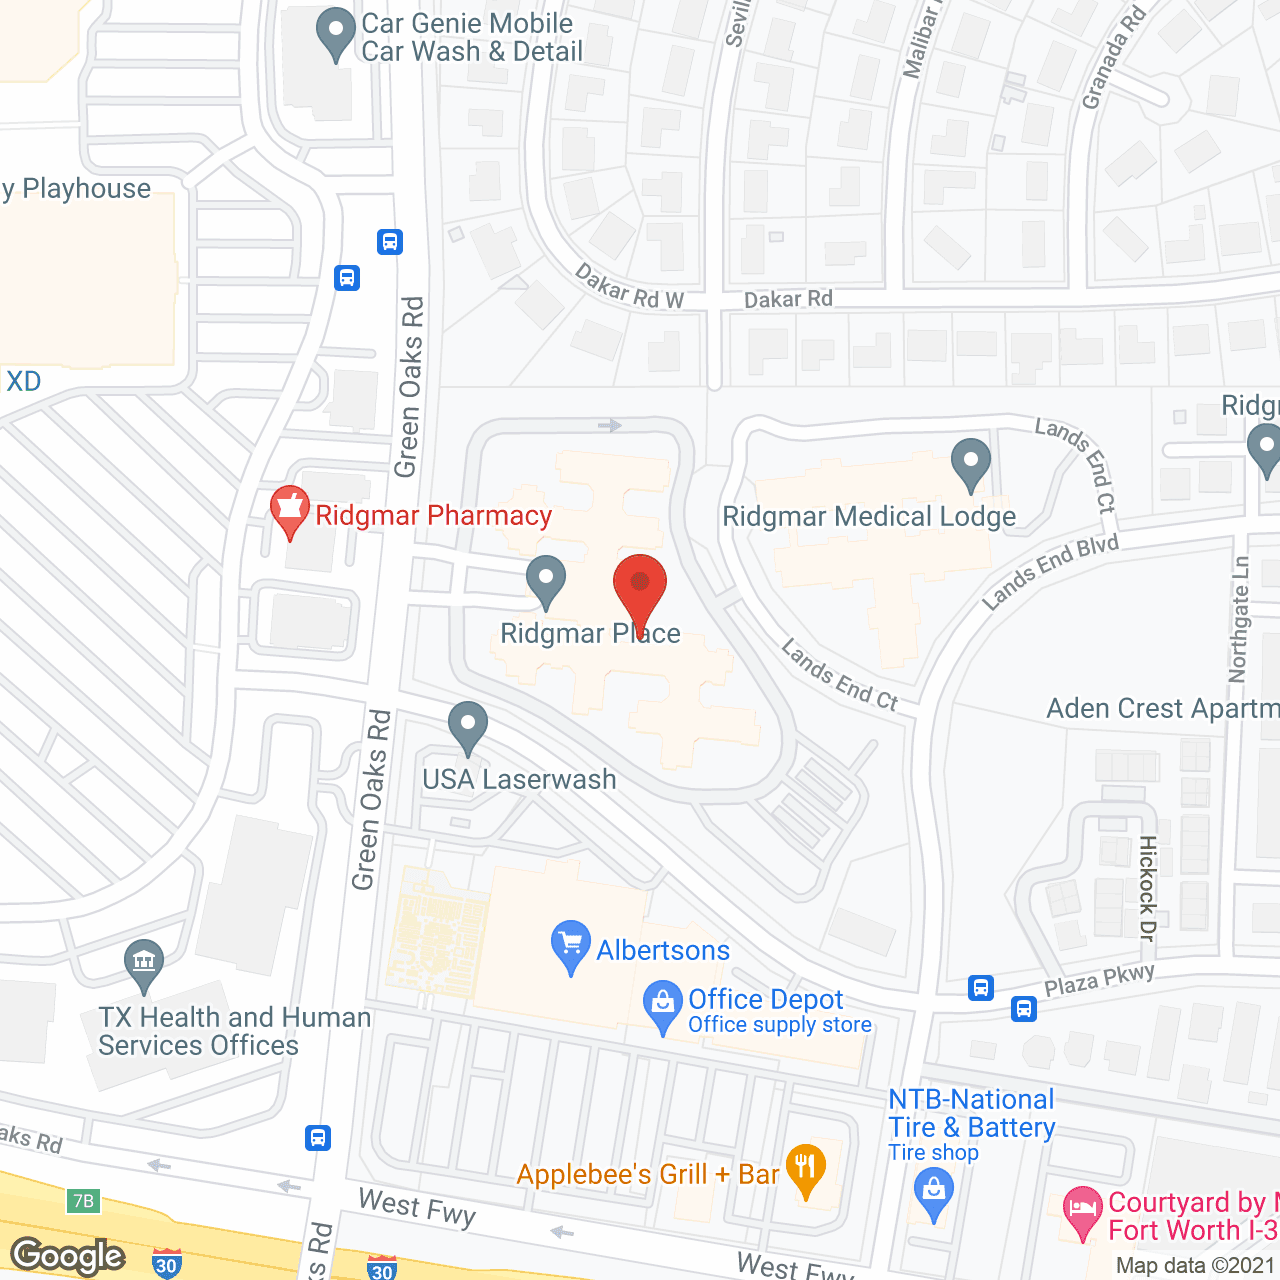 Ridgmar Place in google map